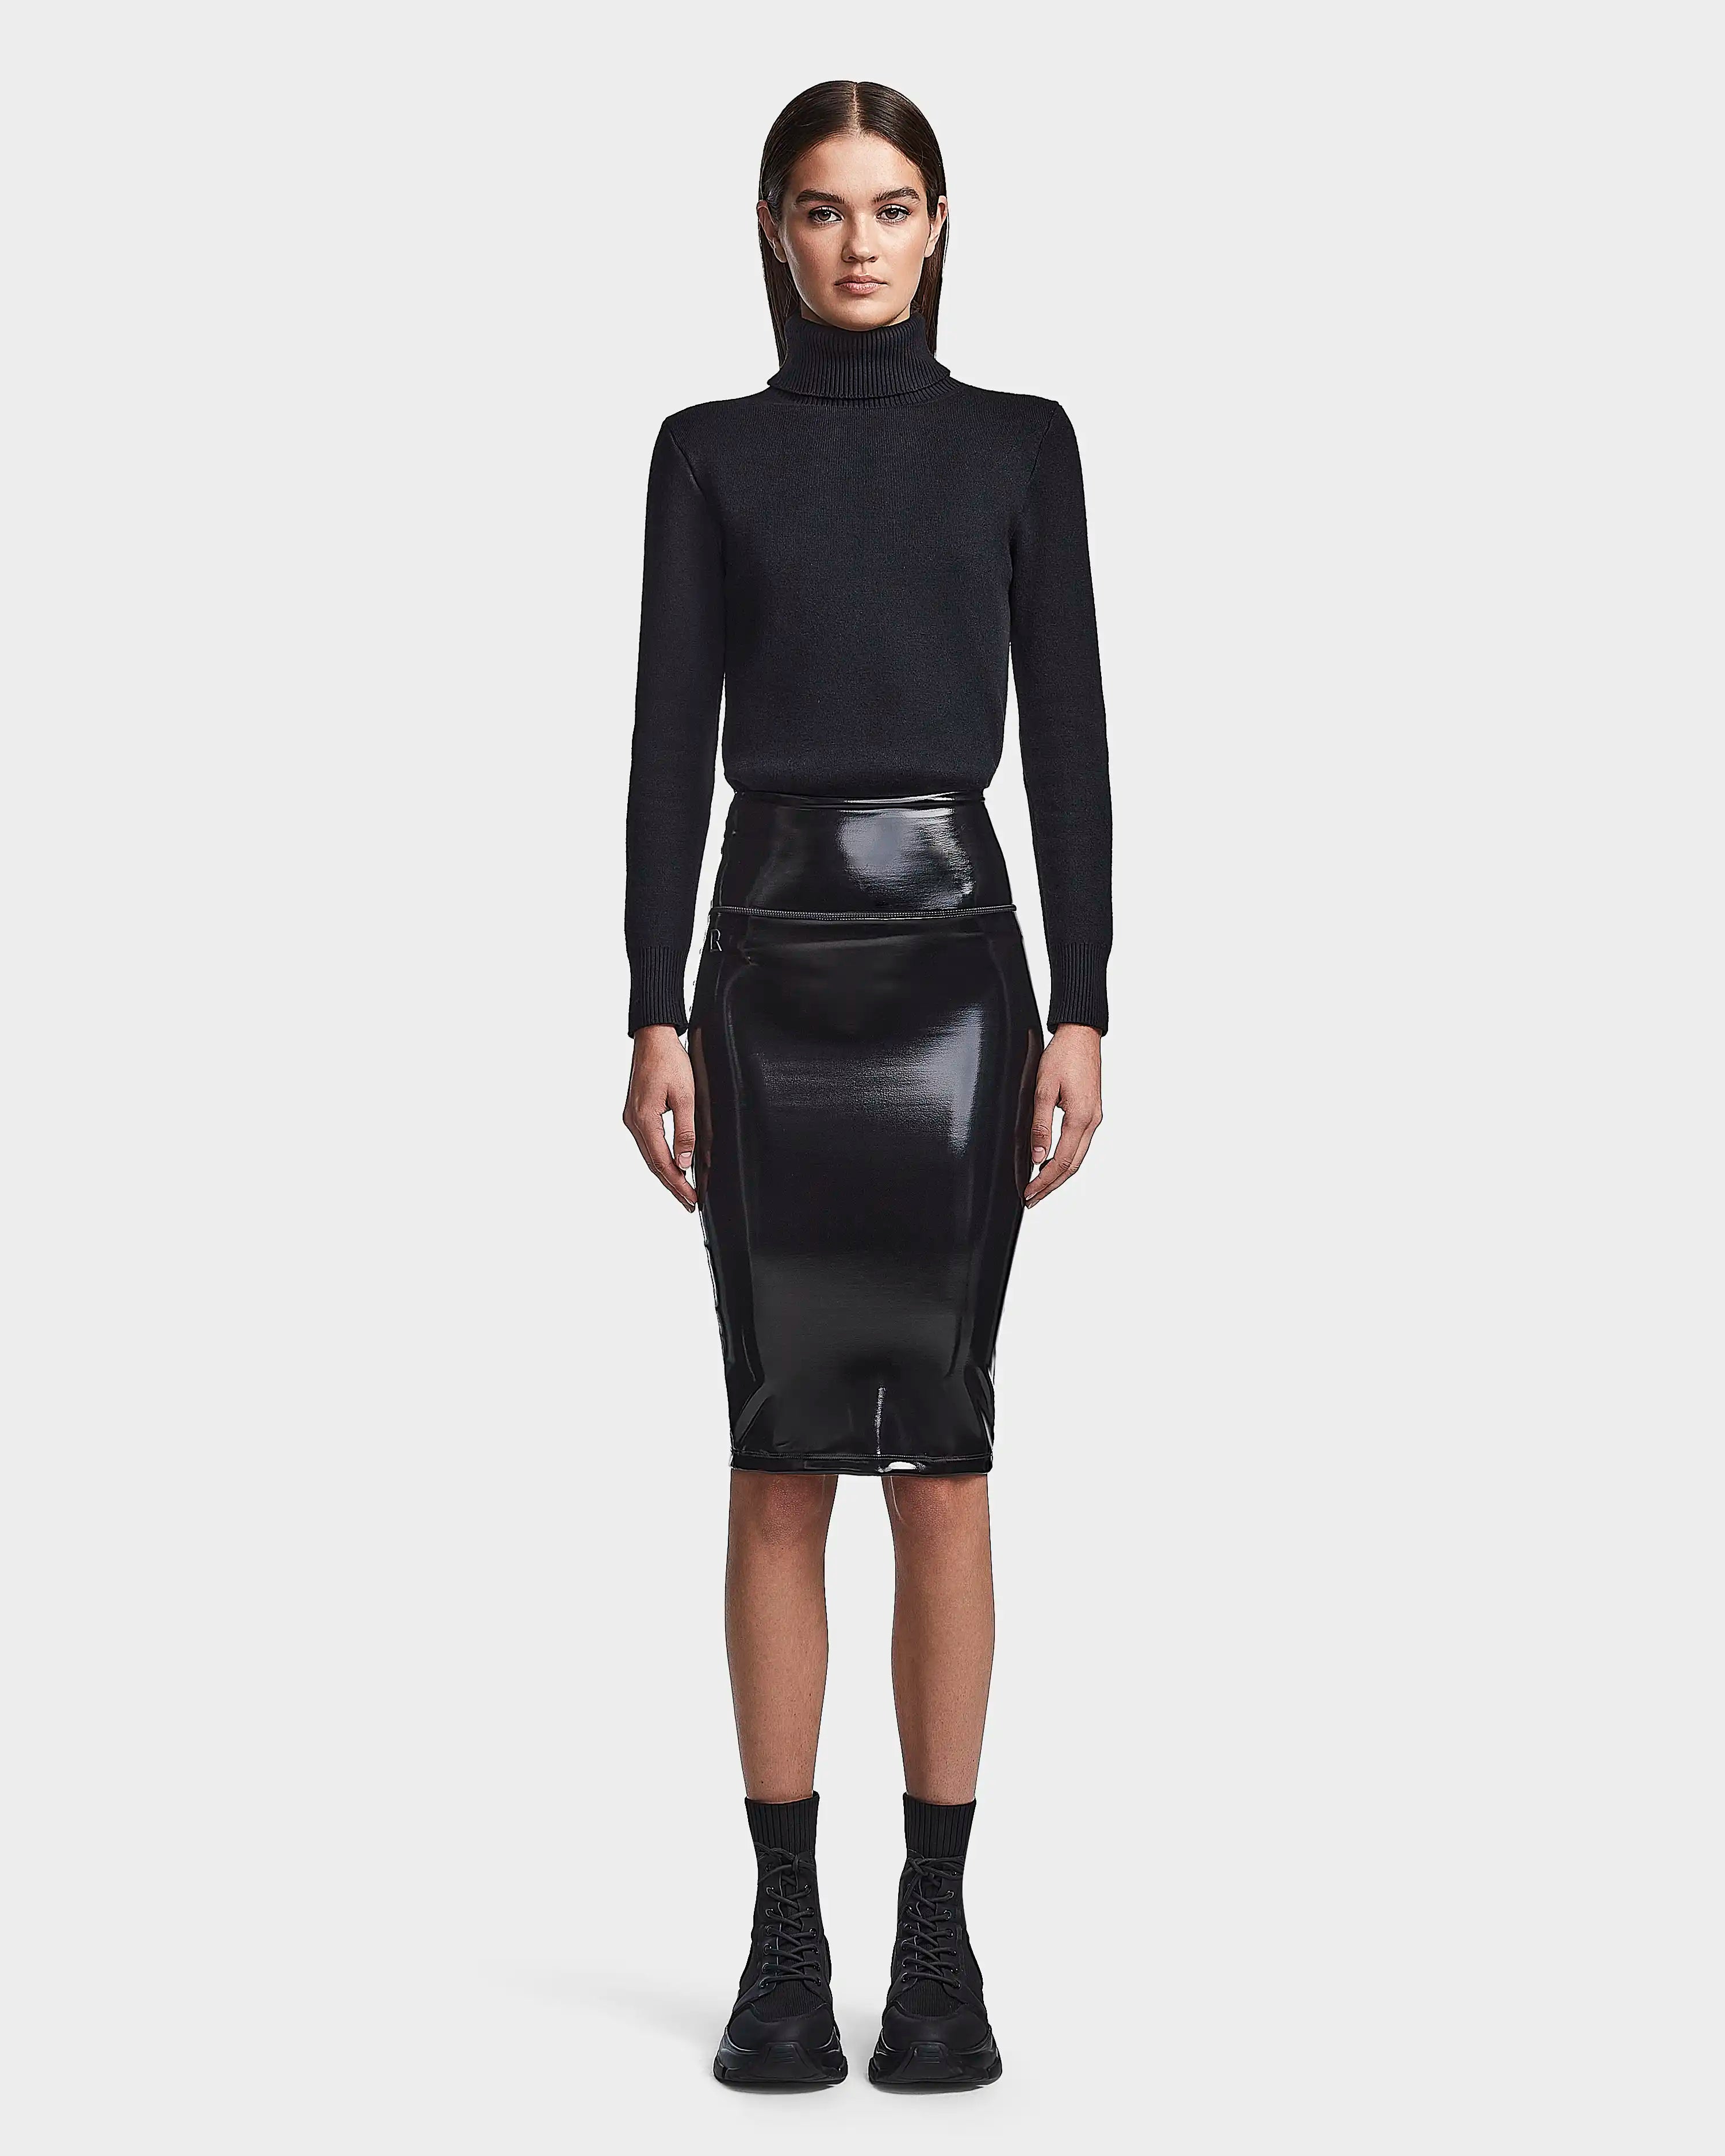 Mireya Black Vegan Leather Pencil Skirt